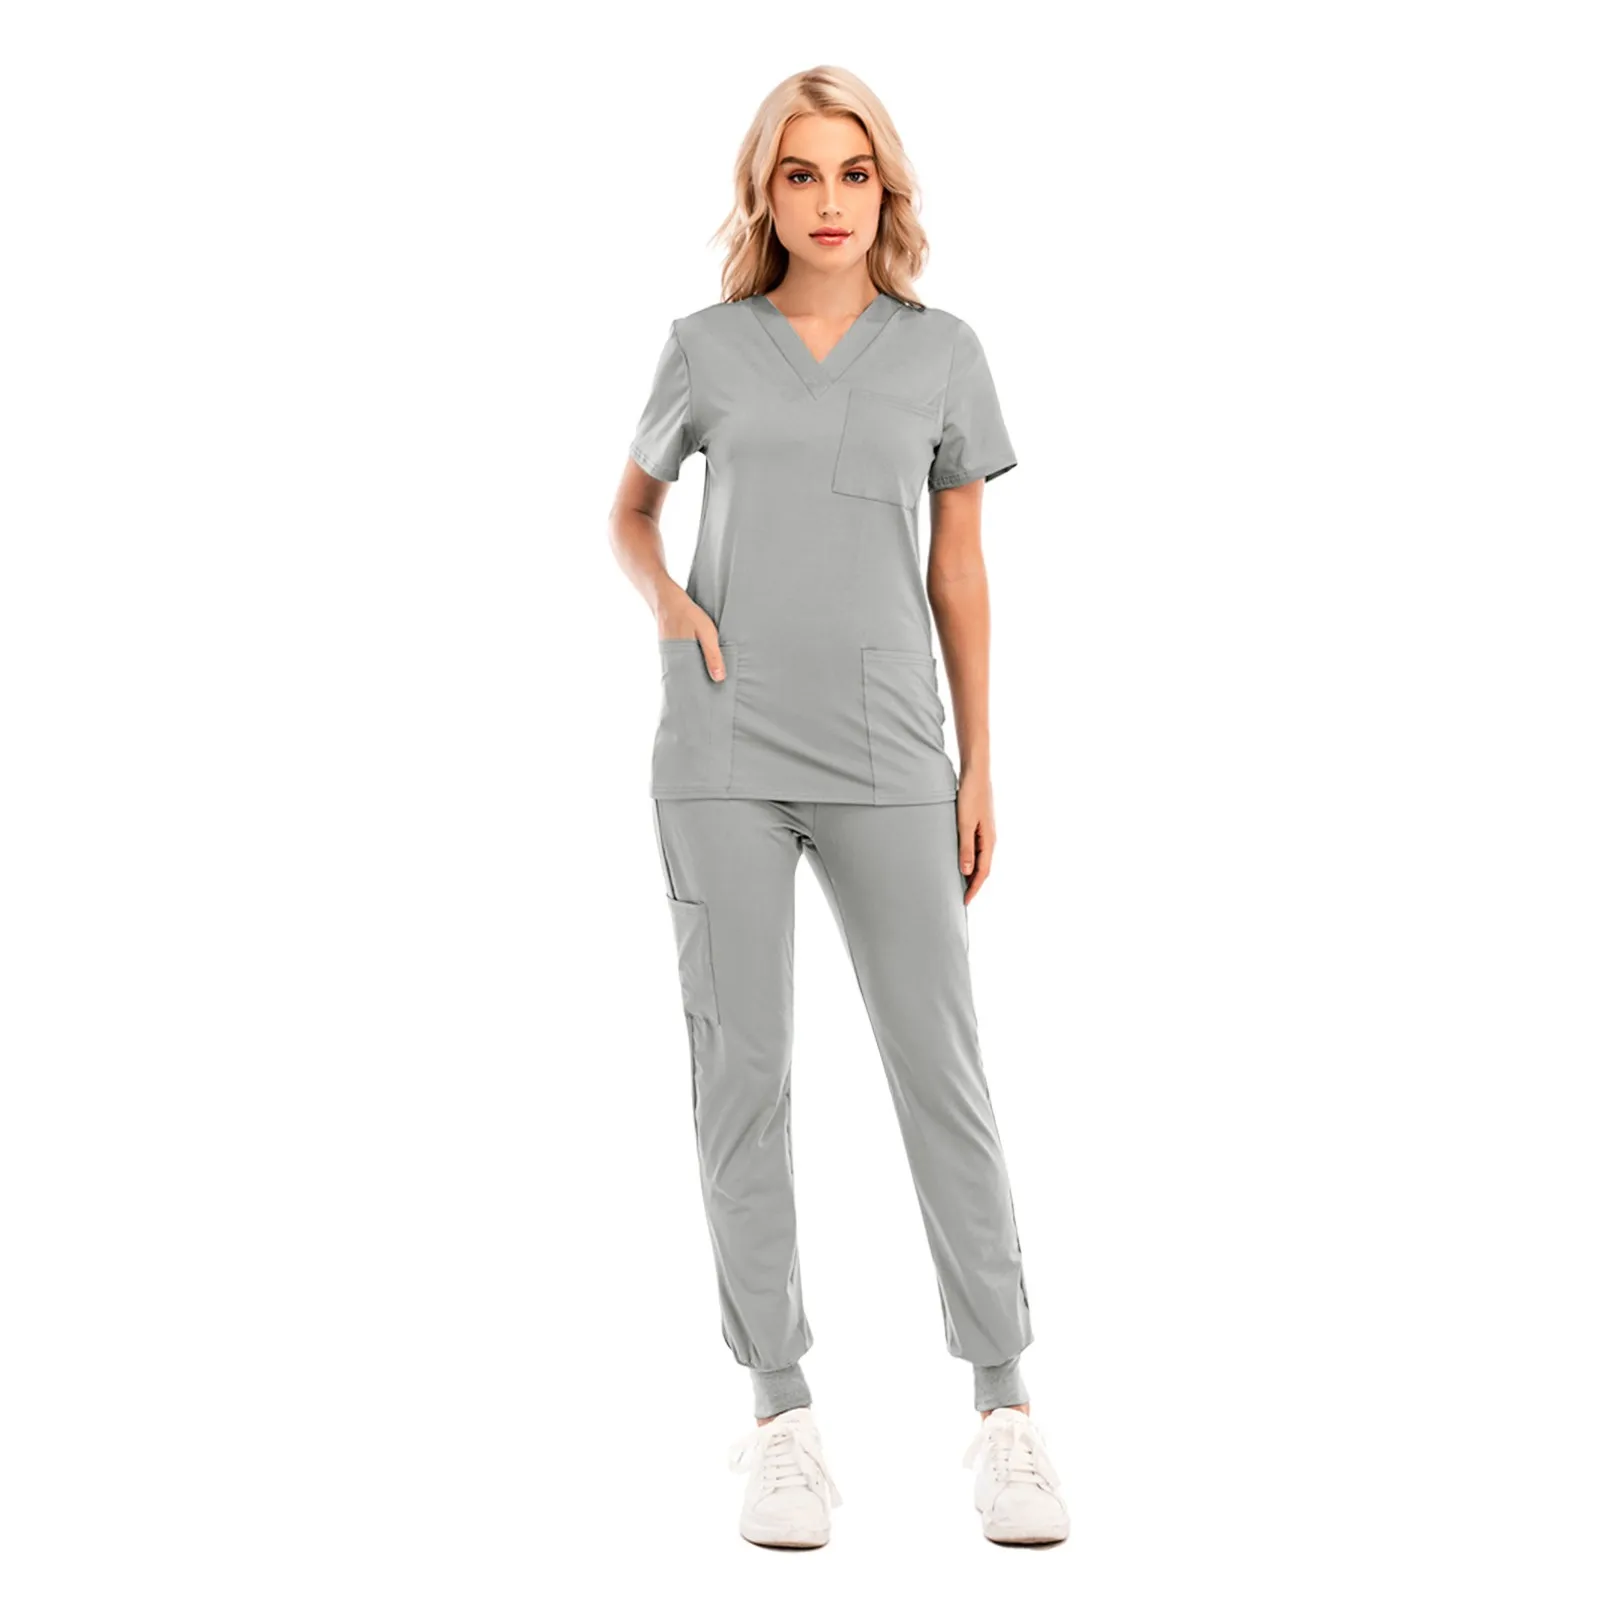 Nurse Uniform Elasticity Scrubs Set Men Women Short Sleeve V-neck Tops+Pants Nursing Working Uniform Suit медицинская одежда L*5 images - 6